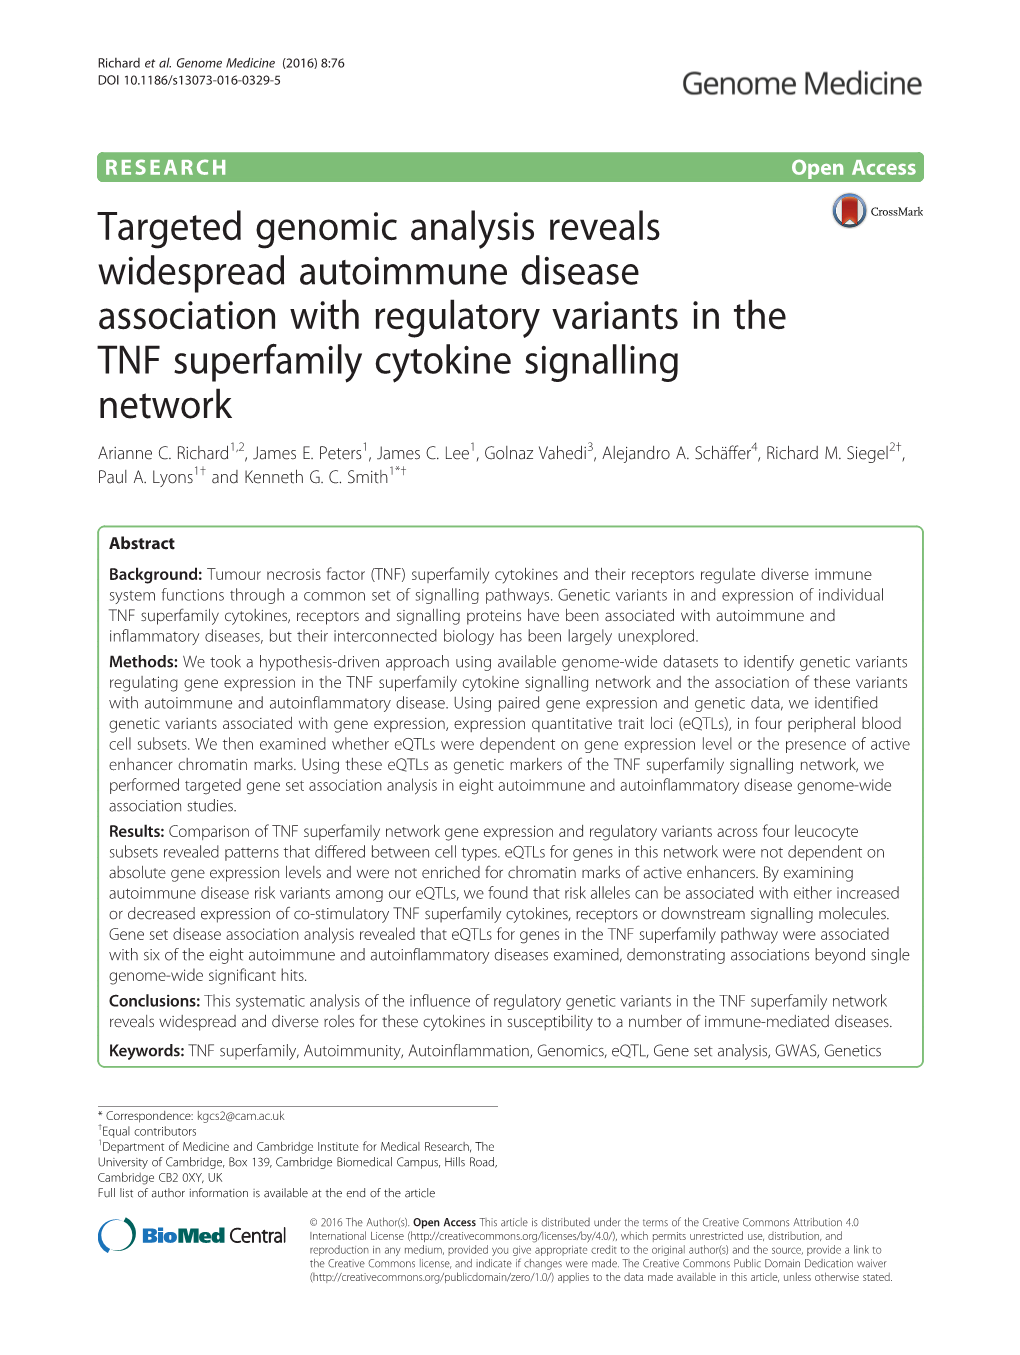 Targeted Genomic Analysis Reveals Widespread Autoimmune Disease Association with Regulatory Variants in the TNF Superfamily Cytokine Signalling Network Arianne C